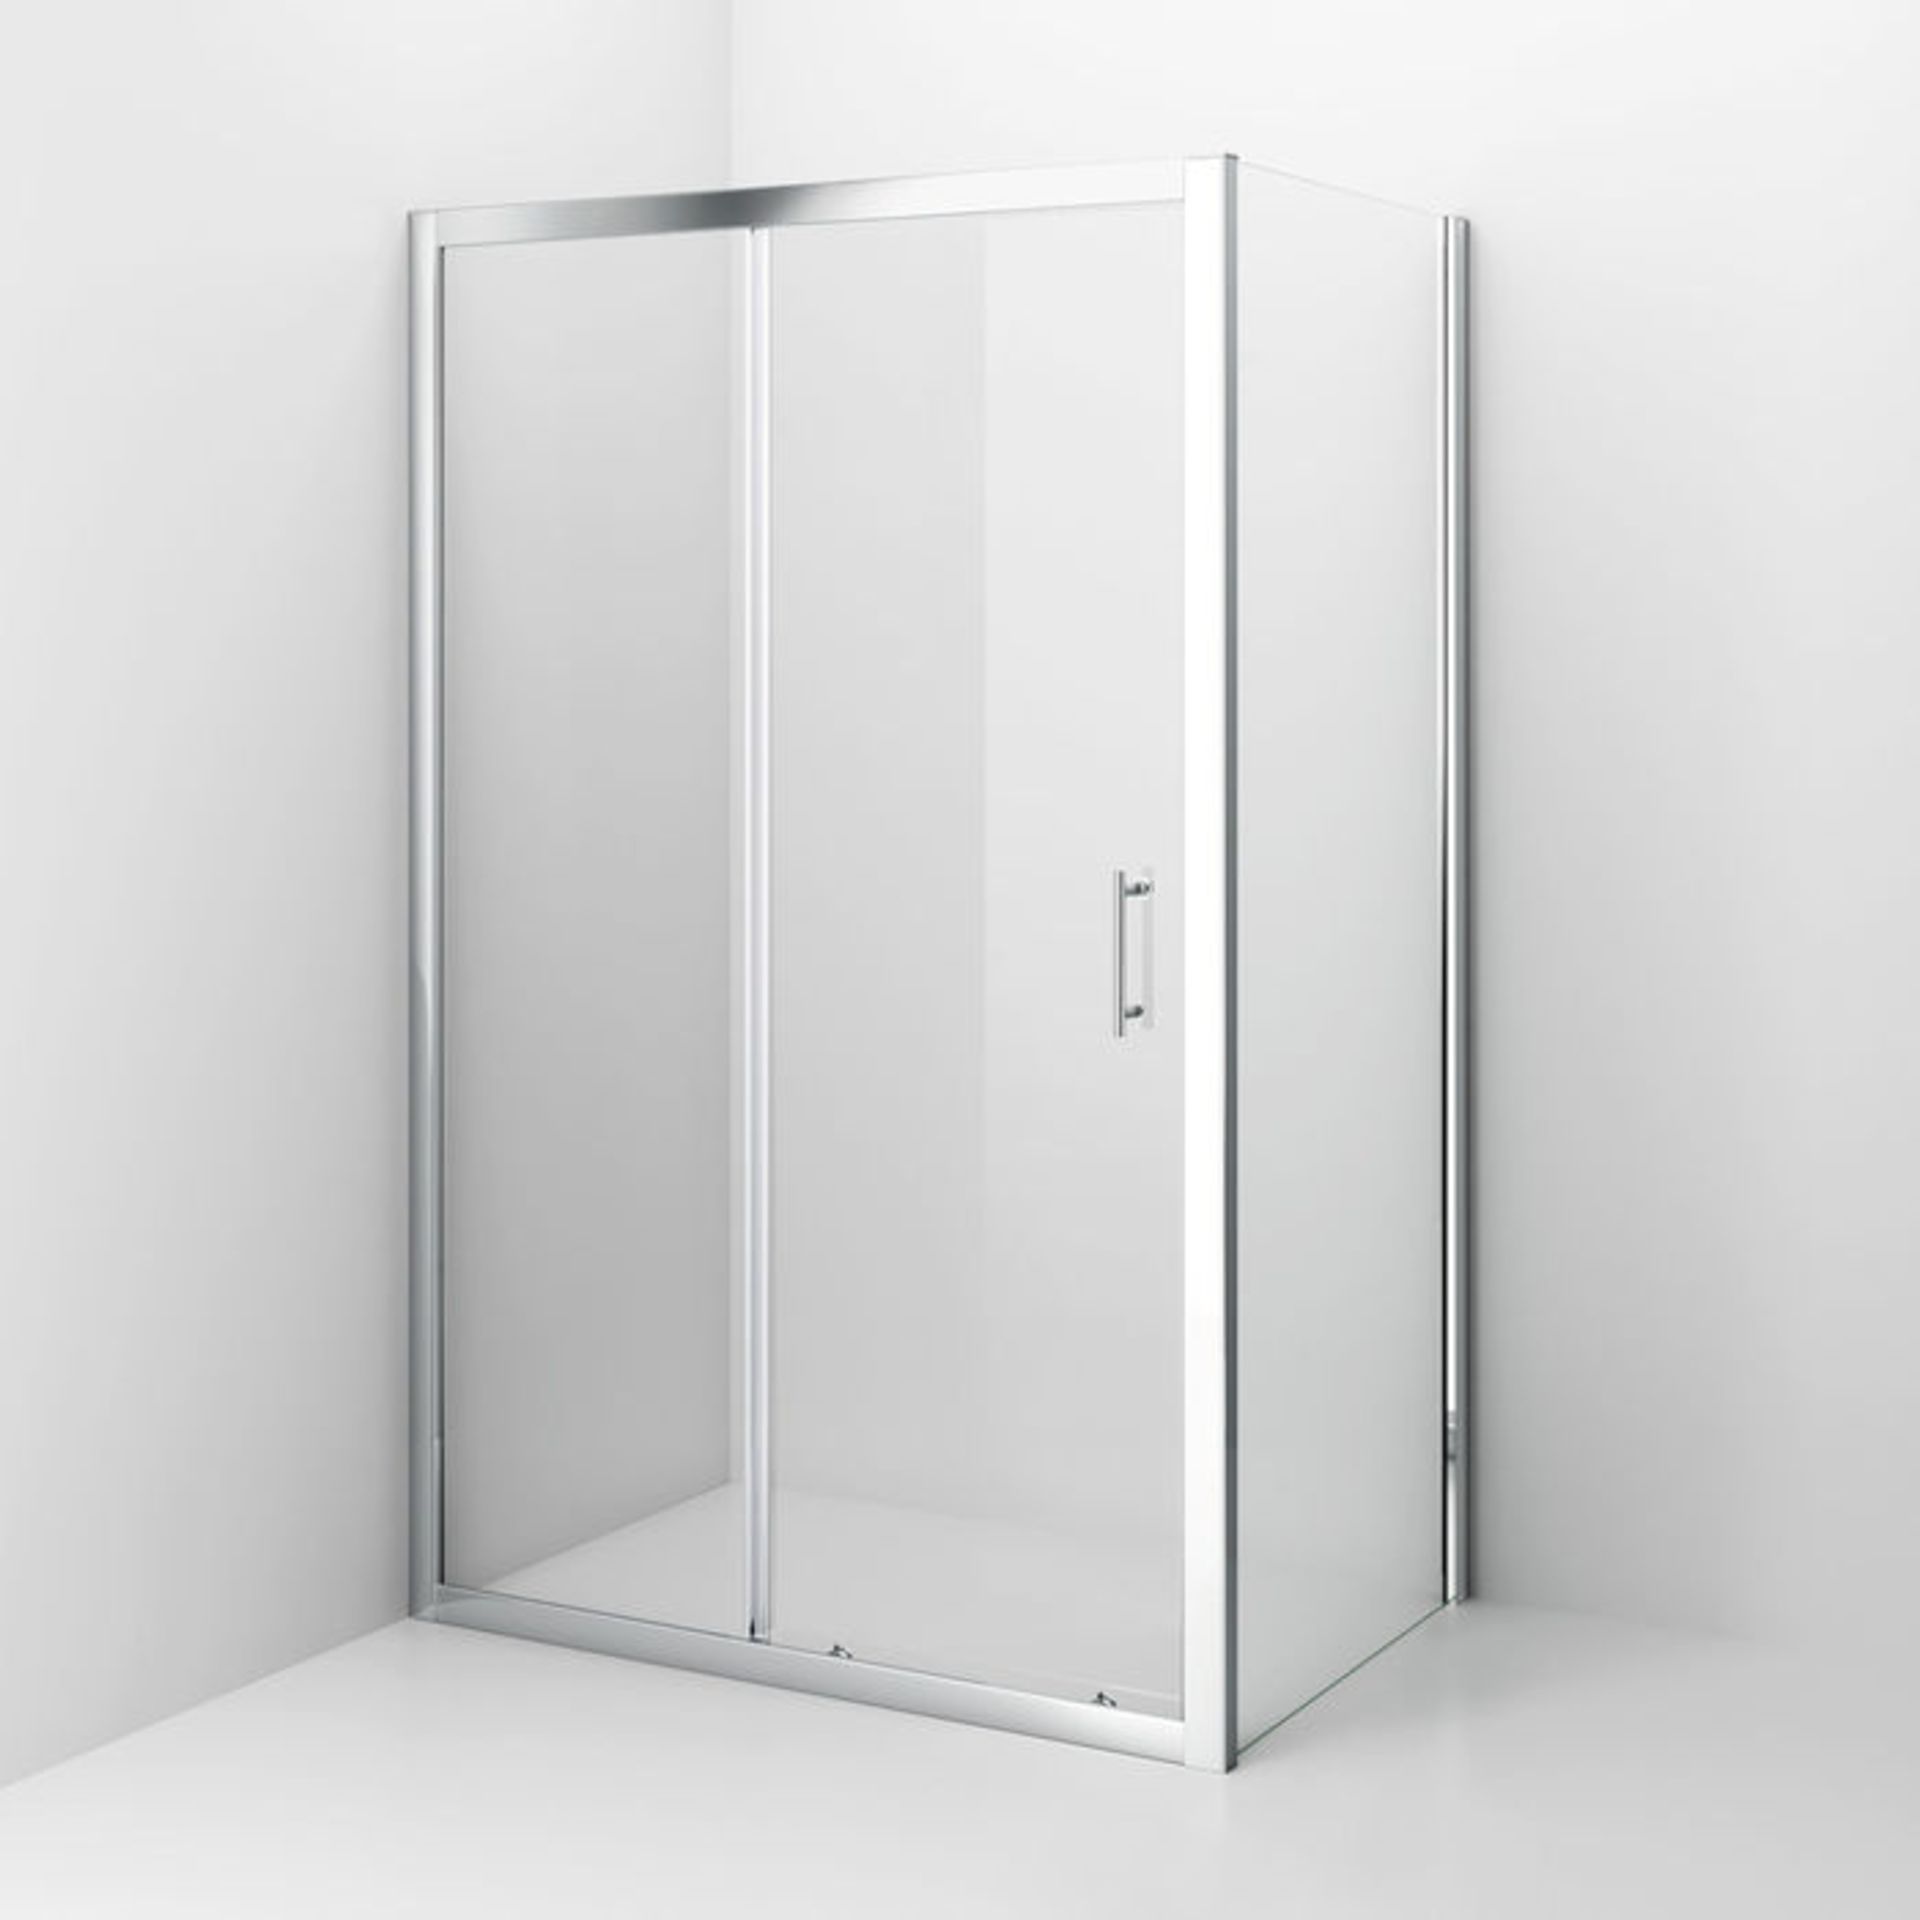 (S125) 1200x760mm - 6mm - Elements Sliding Door Shower Enclosure RRP £499.99 6mm Safety Glass - Image 4 of 6